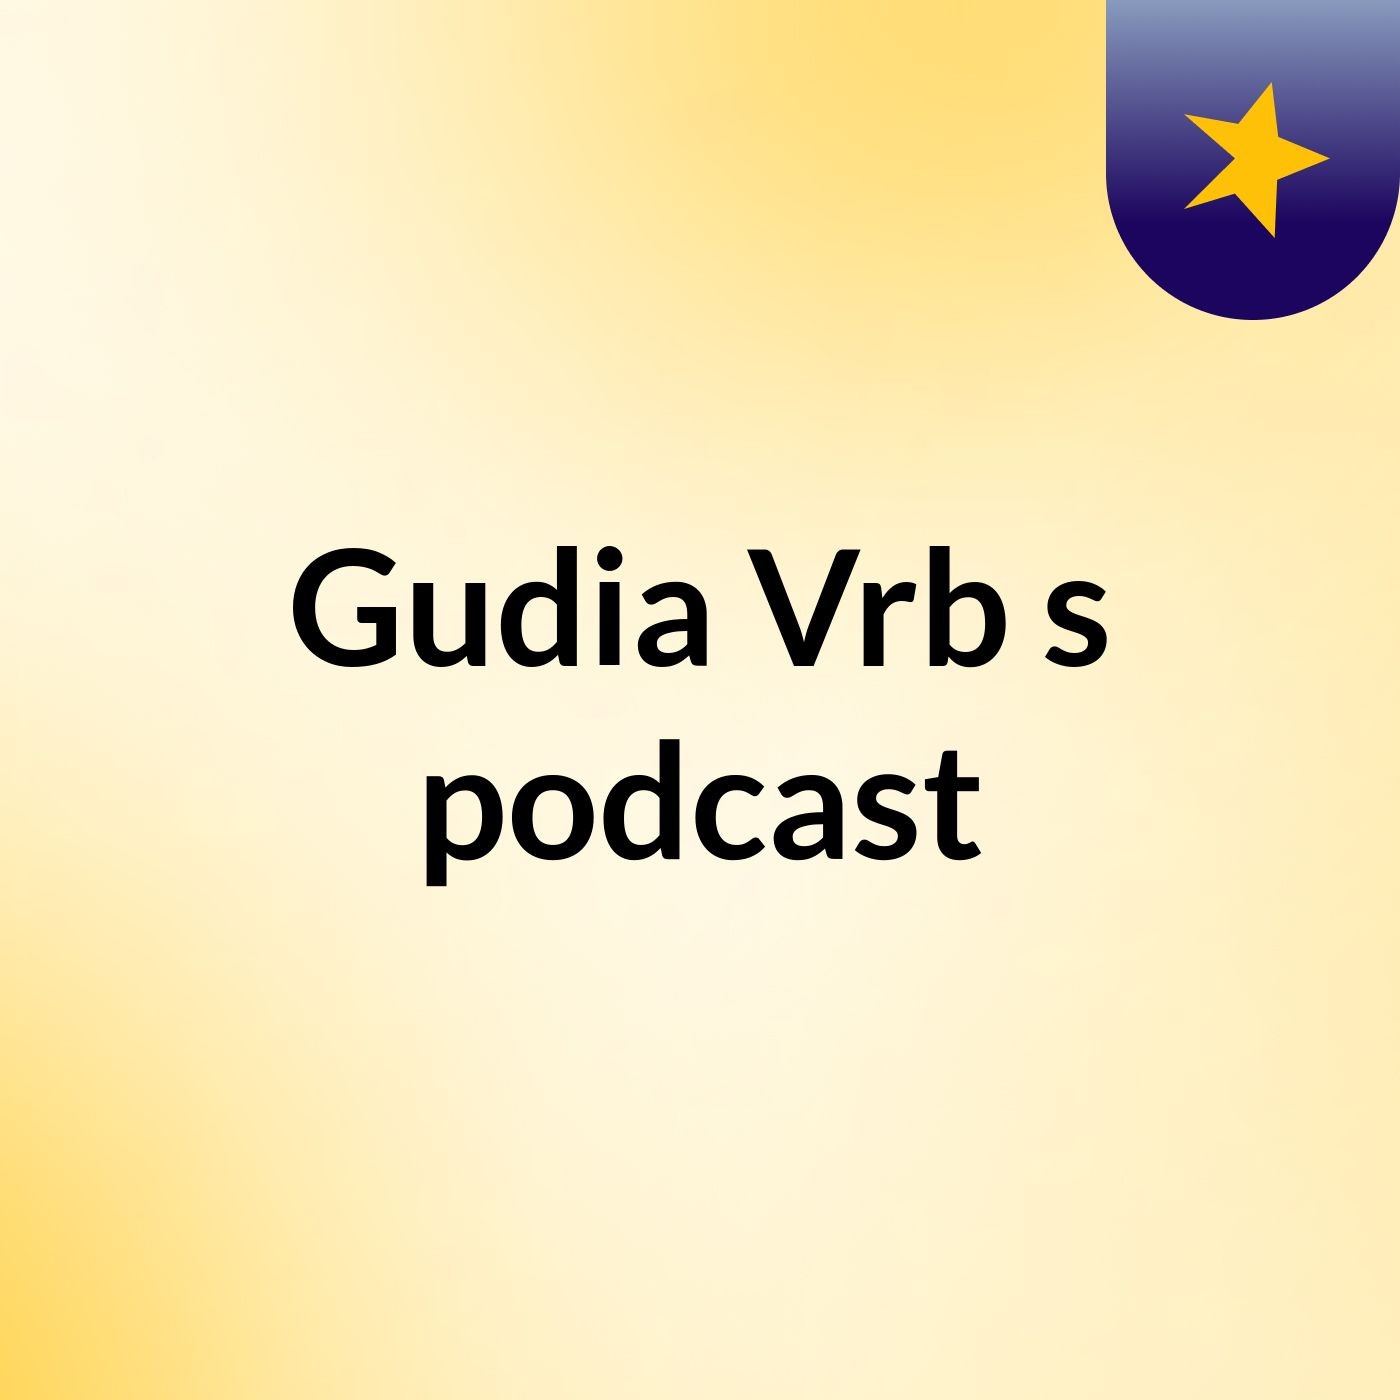 Gudia Vrb's podcast